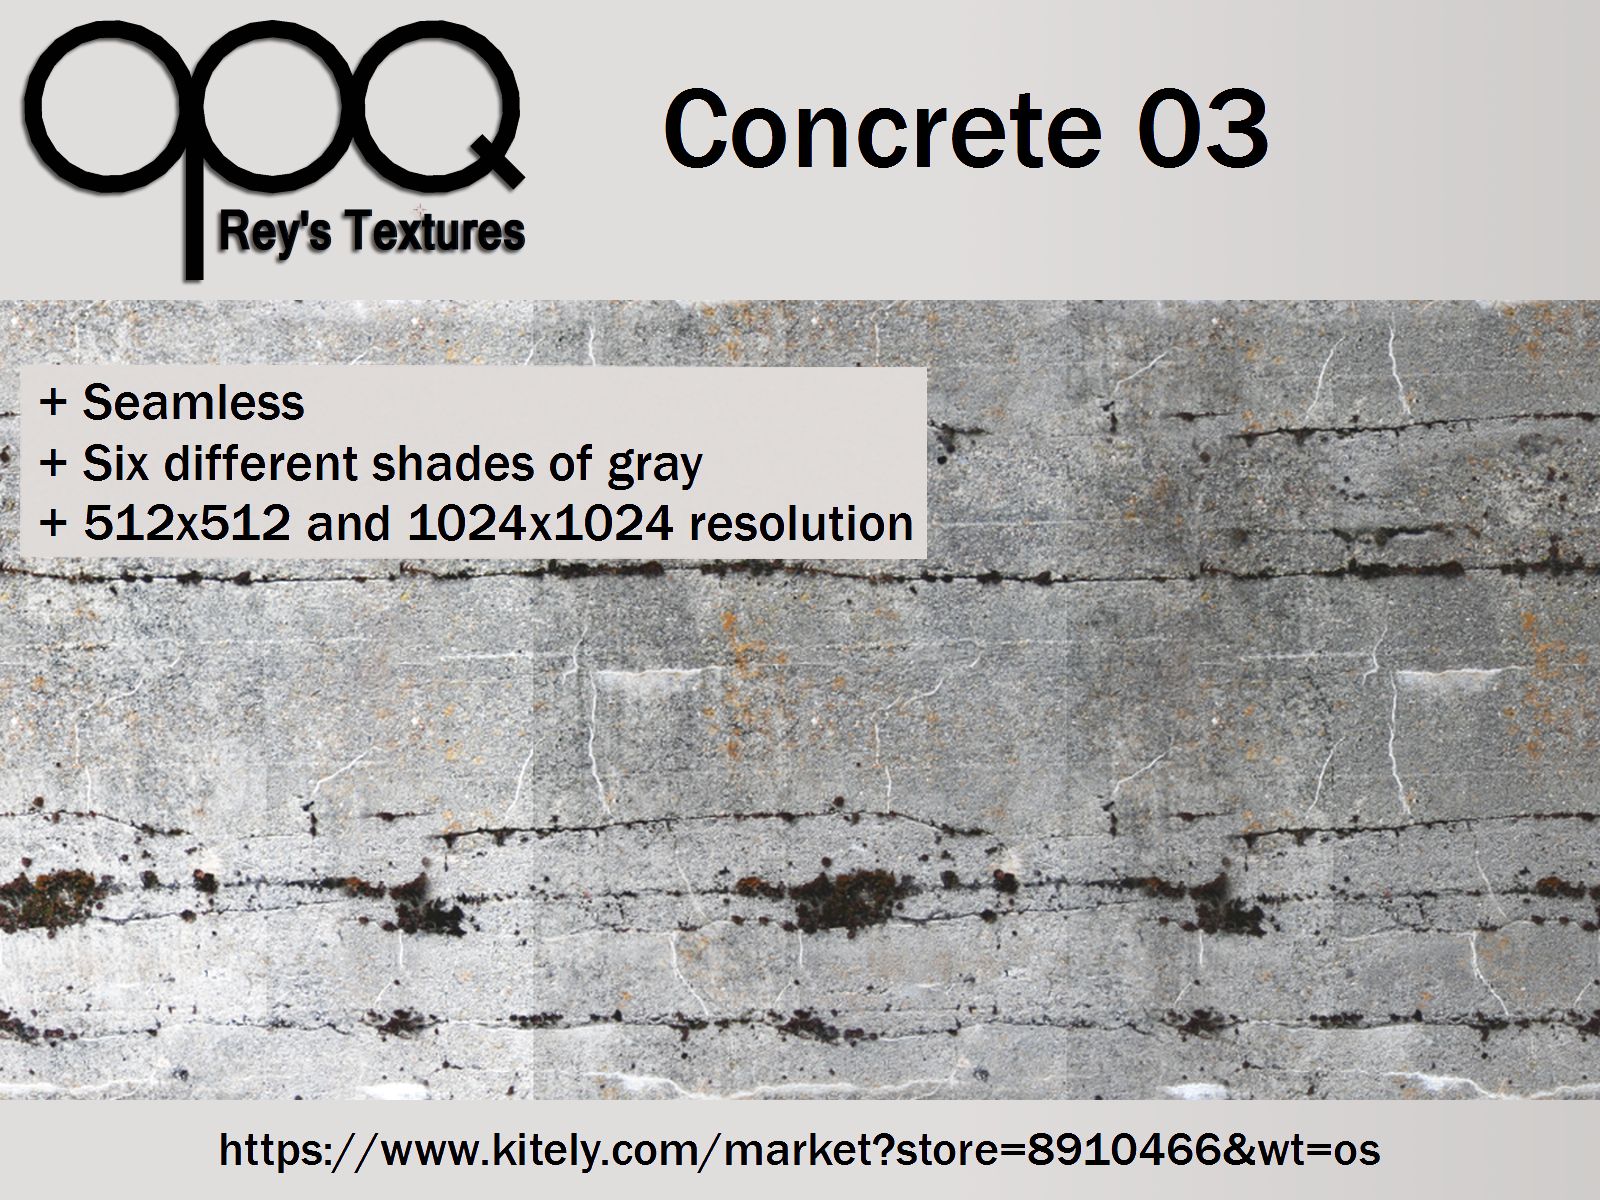 Rey's Concrete 03 Poster Kitely.jpg